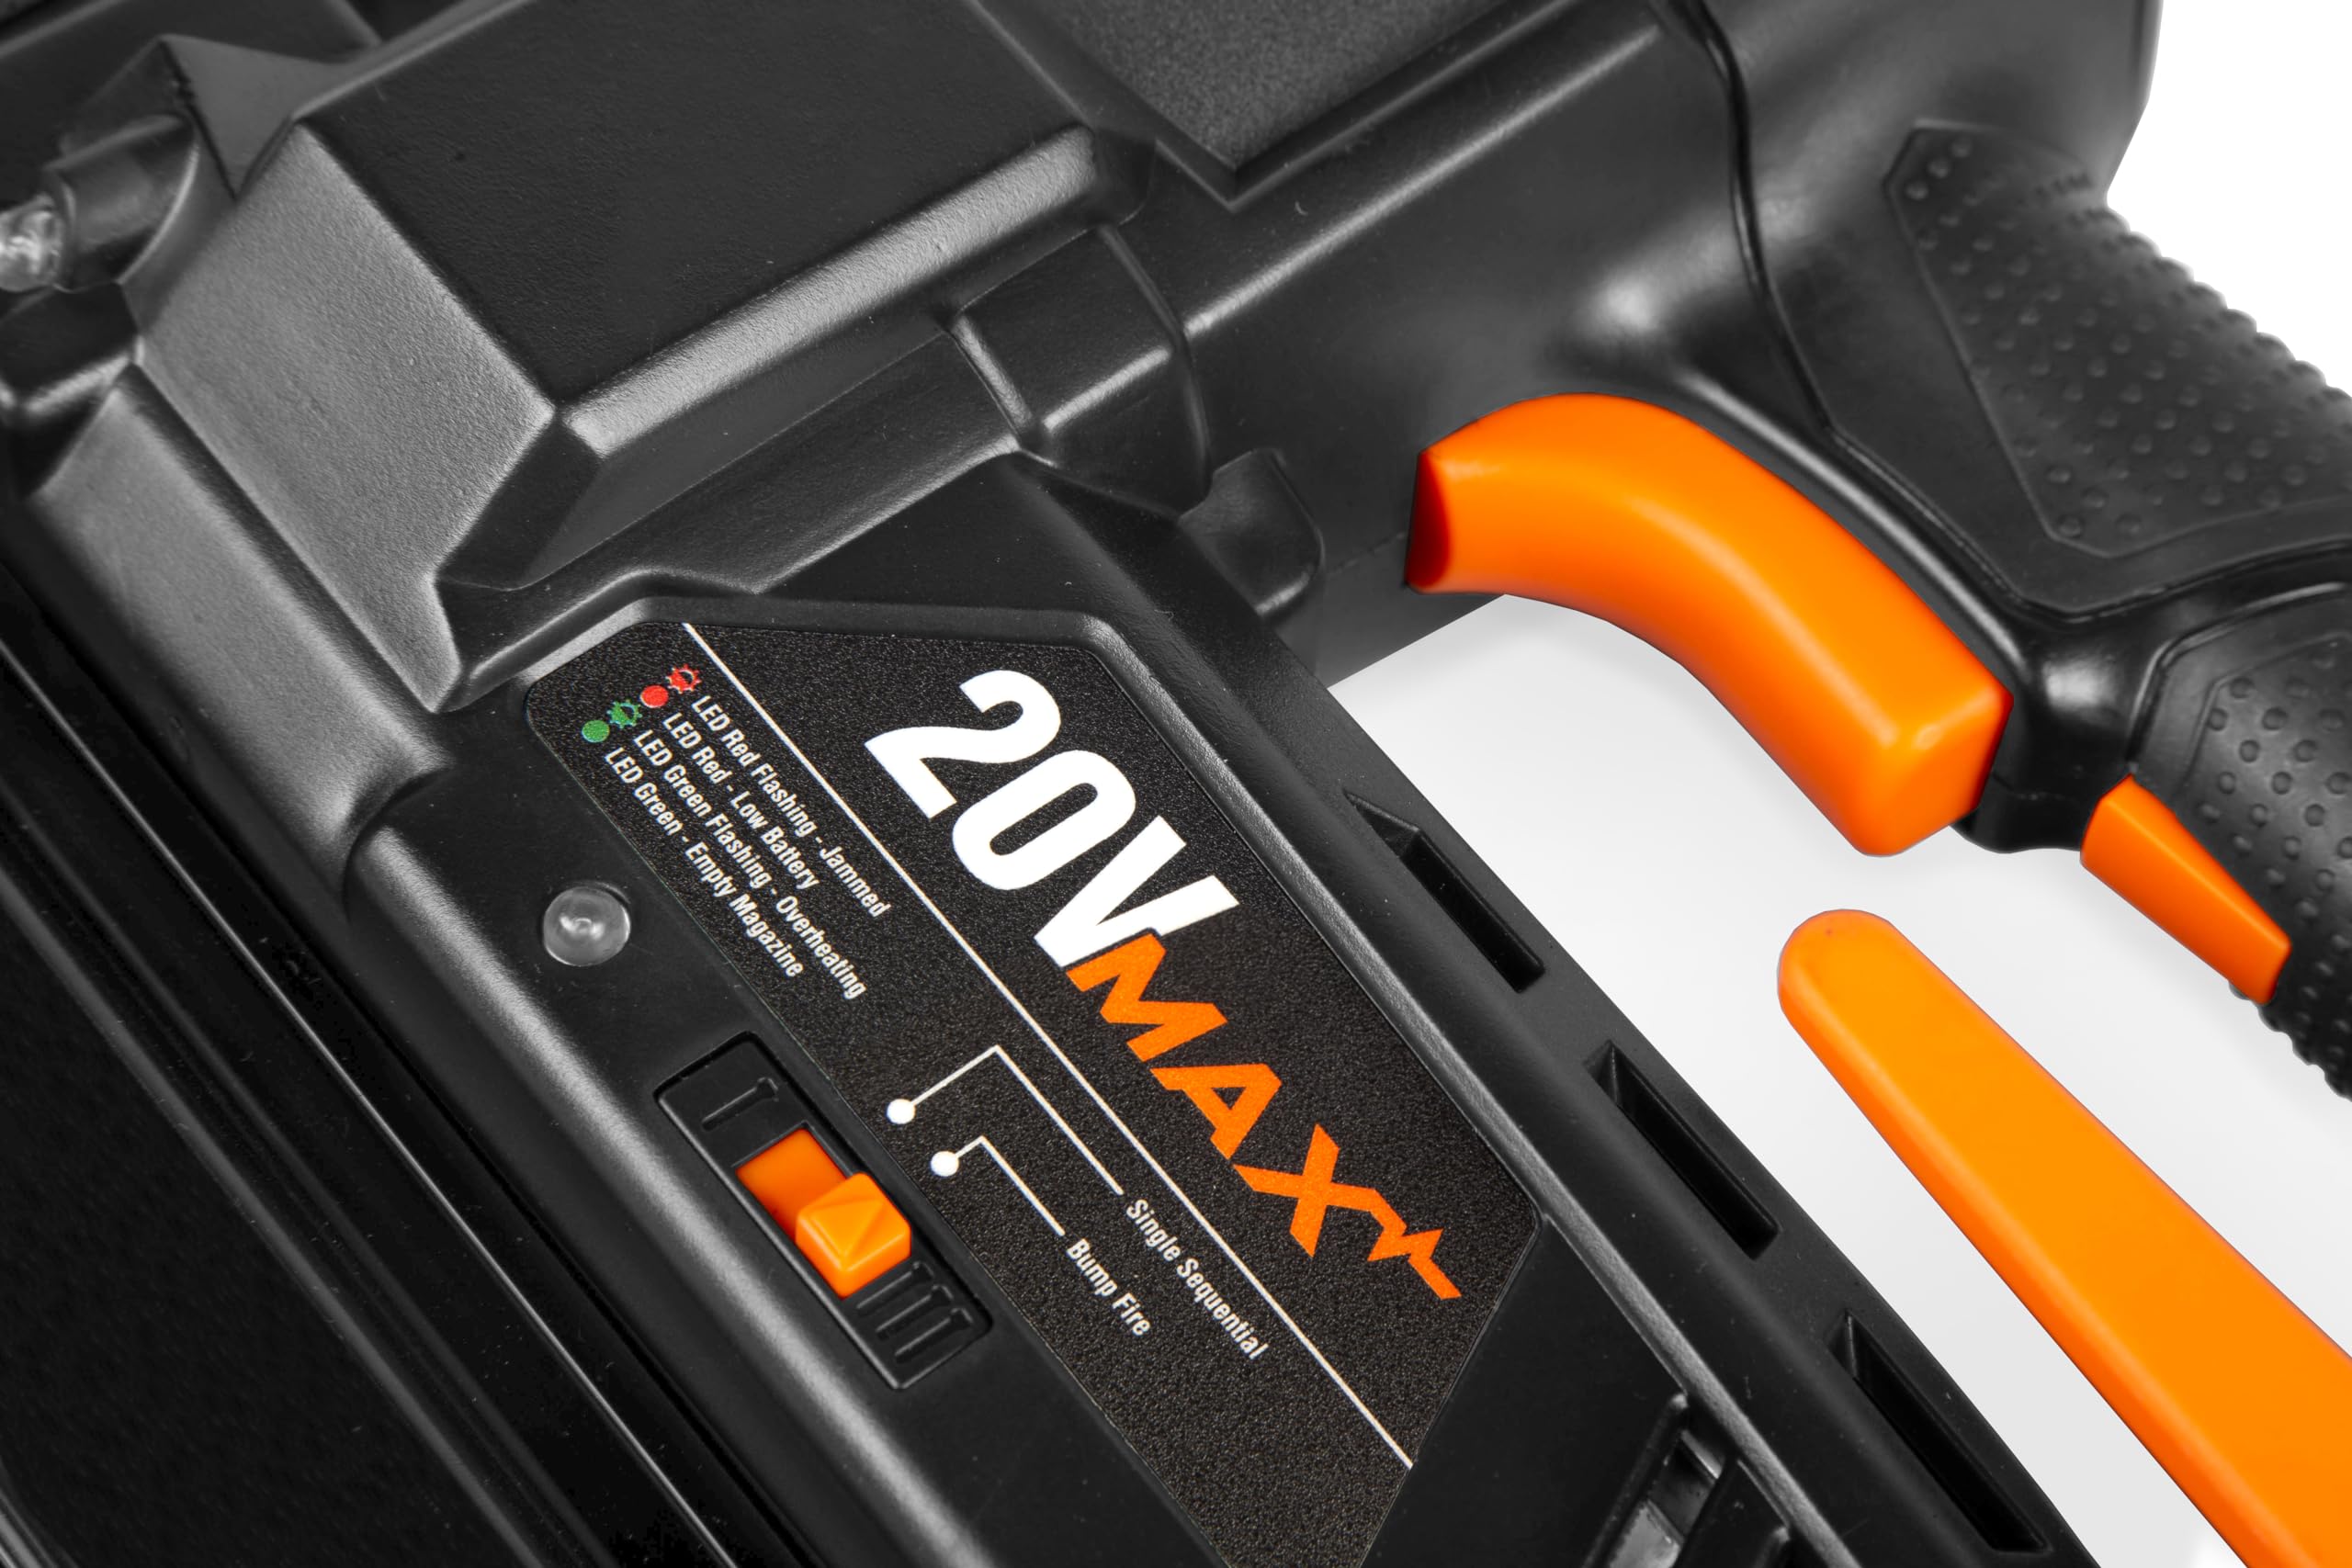 WEN 20V Max Cordless 18-Gauge Brad Nailer with 2.0Ah Battery and Charger (20512)